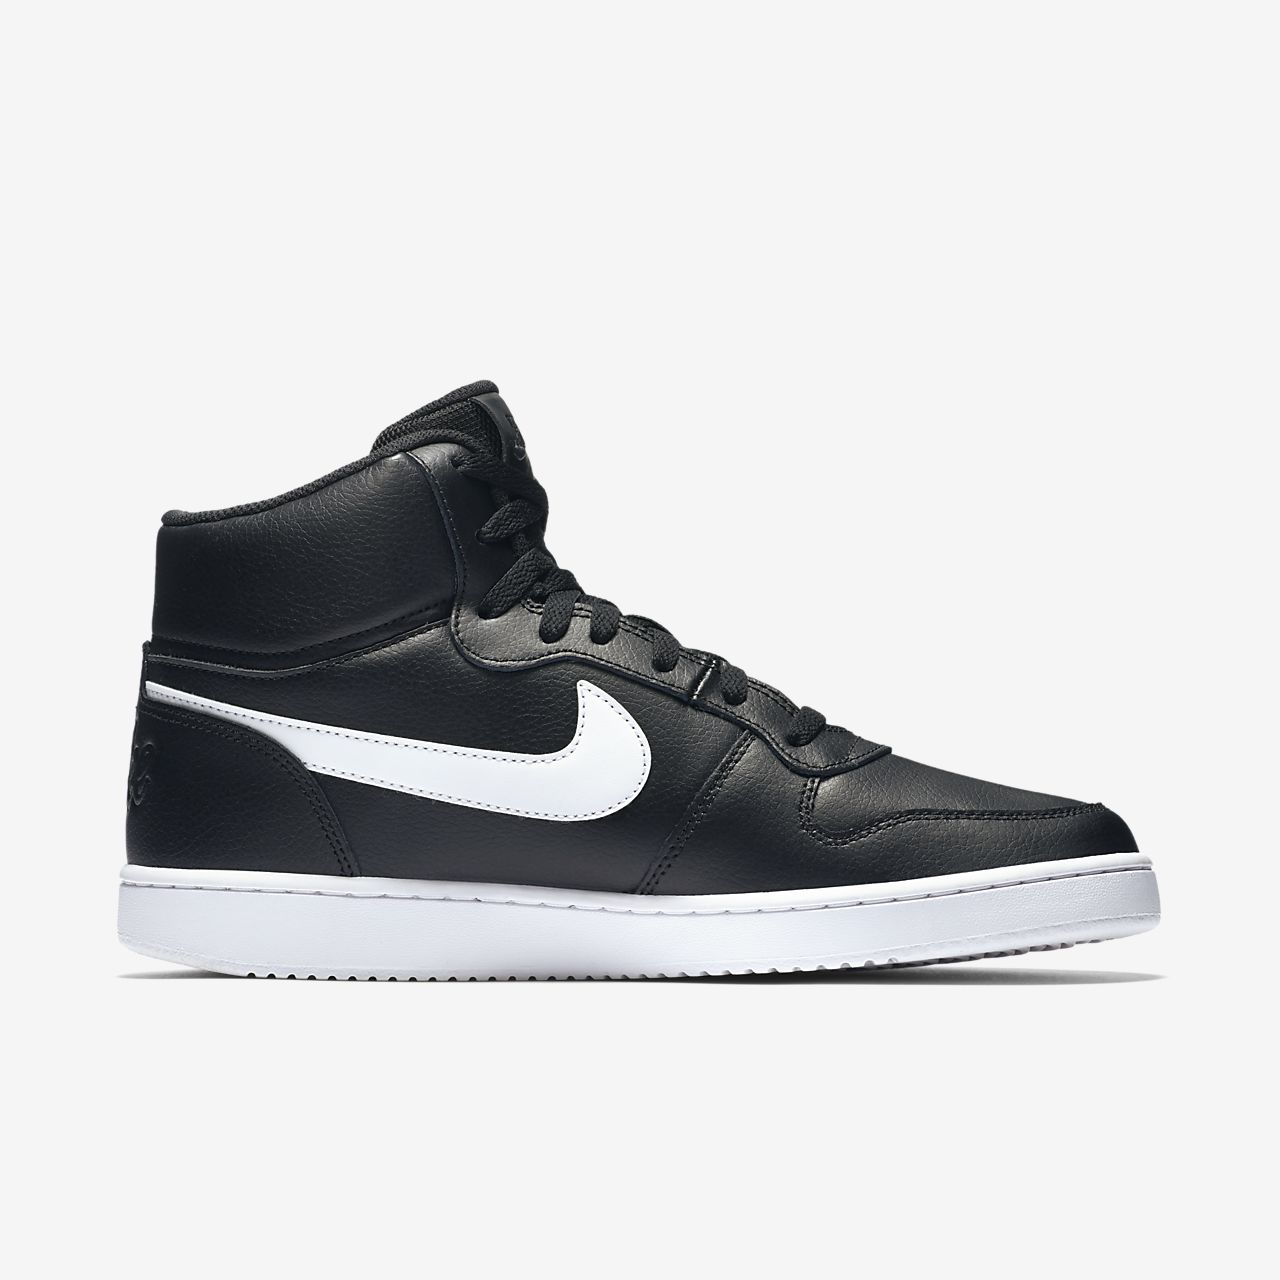 Nike Ebernon Mid - Sneakers - Sort/Hvide | DK-91033